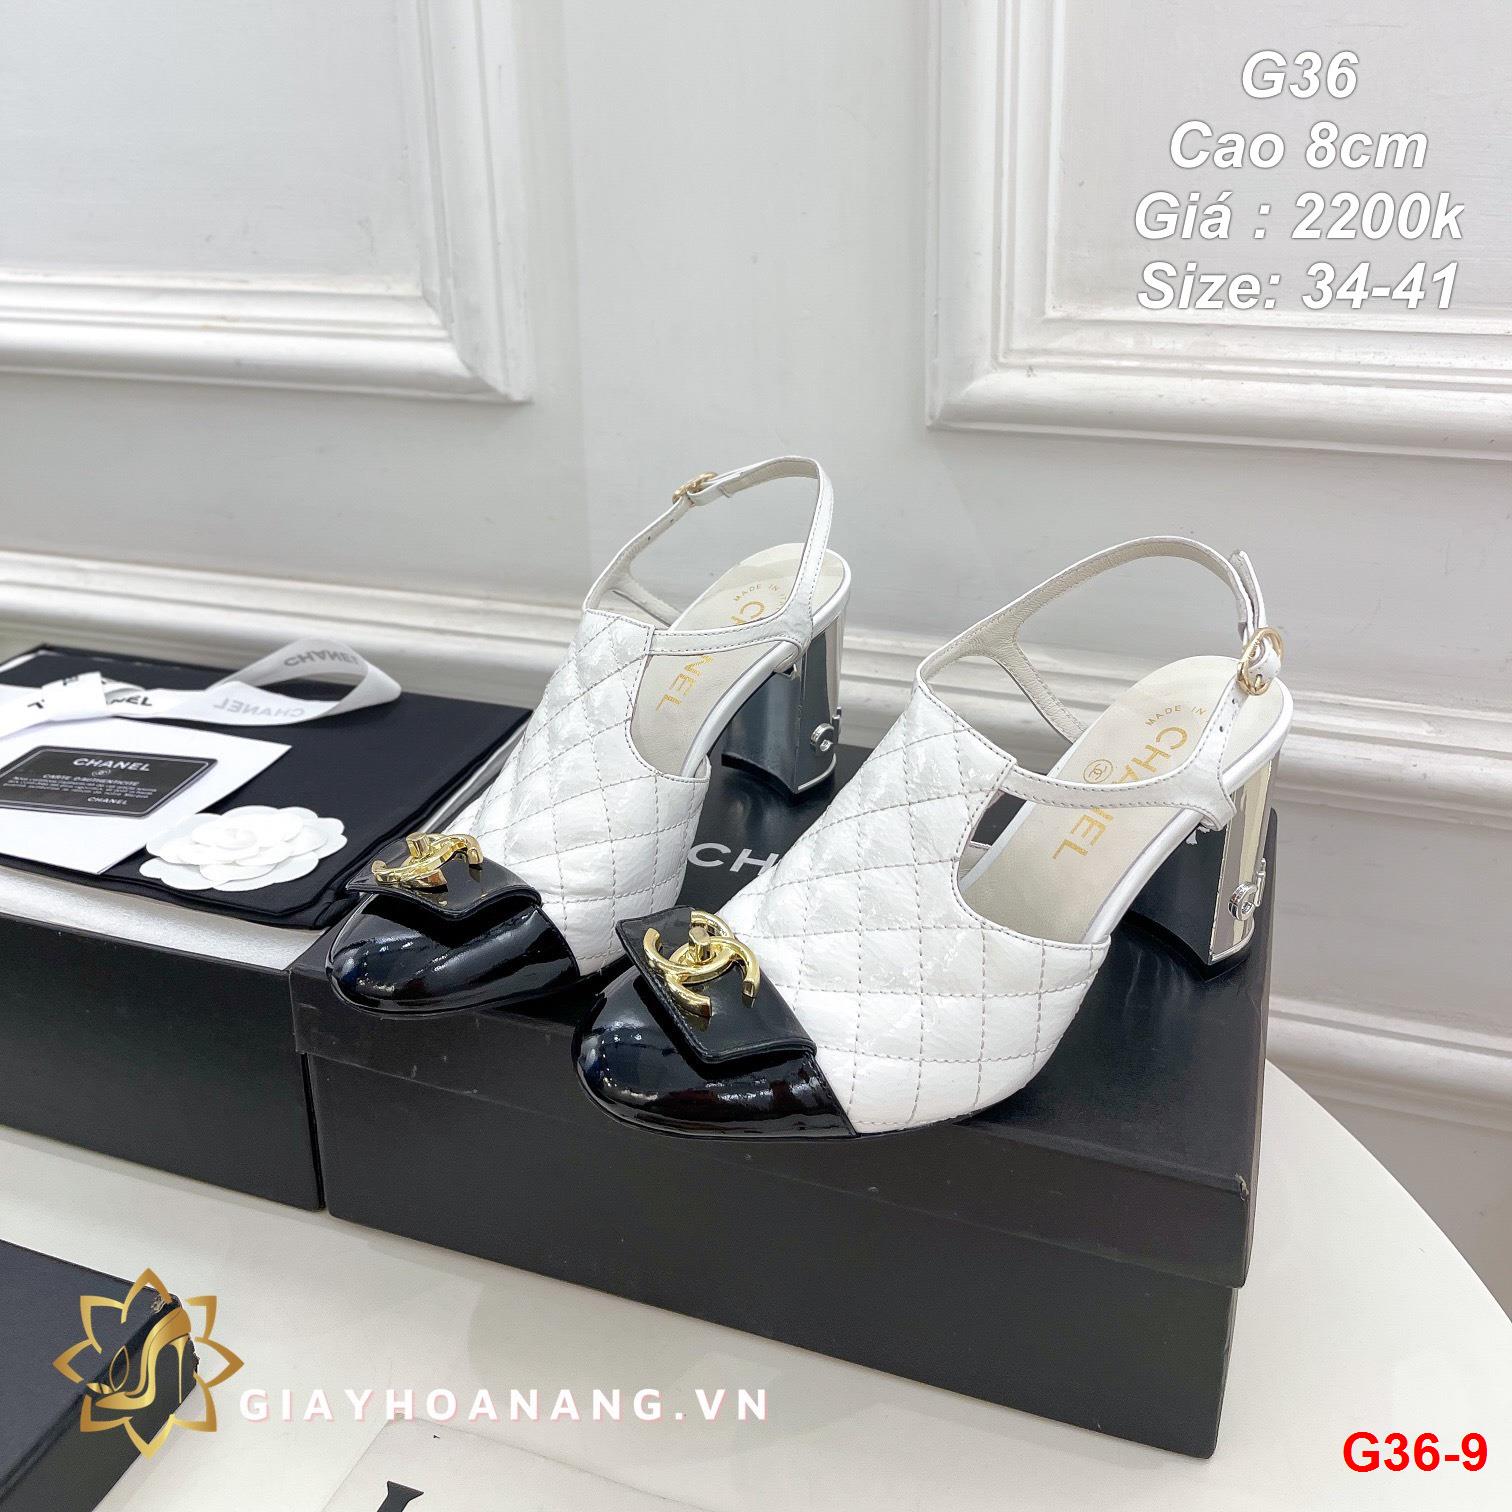 G36-9 Chanel sandal cao 8cm siêu cấp